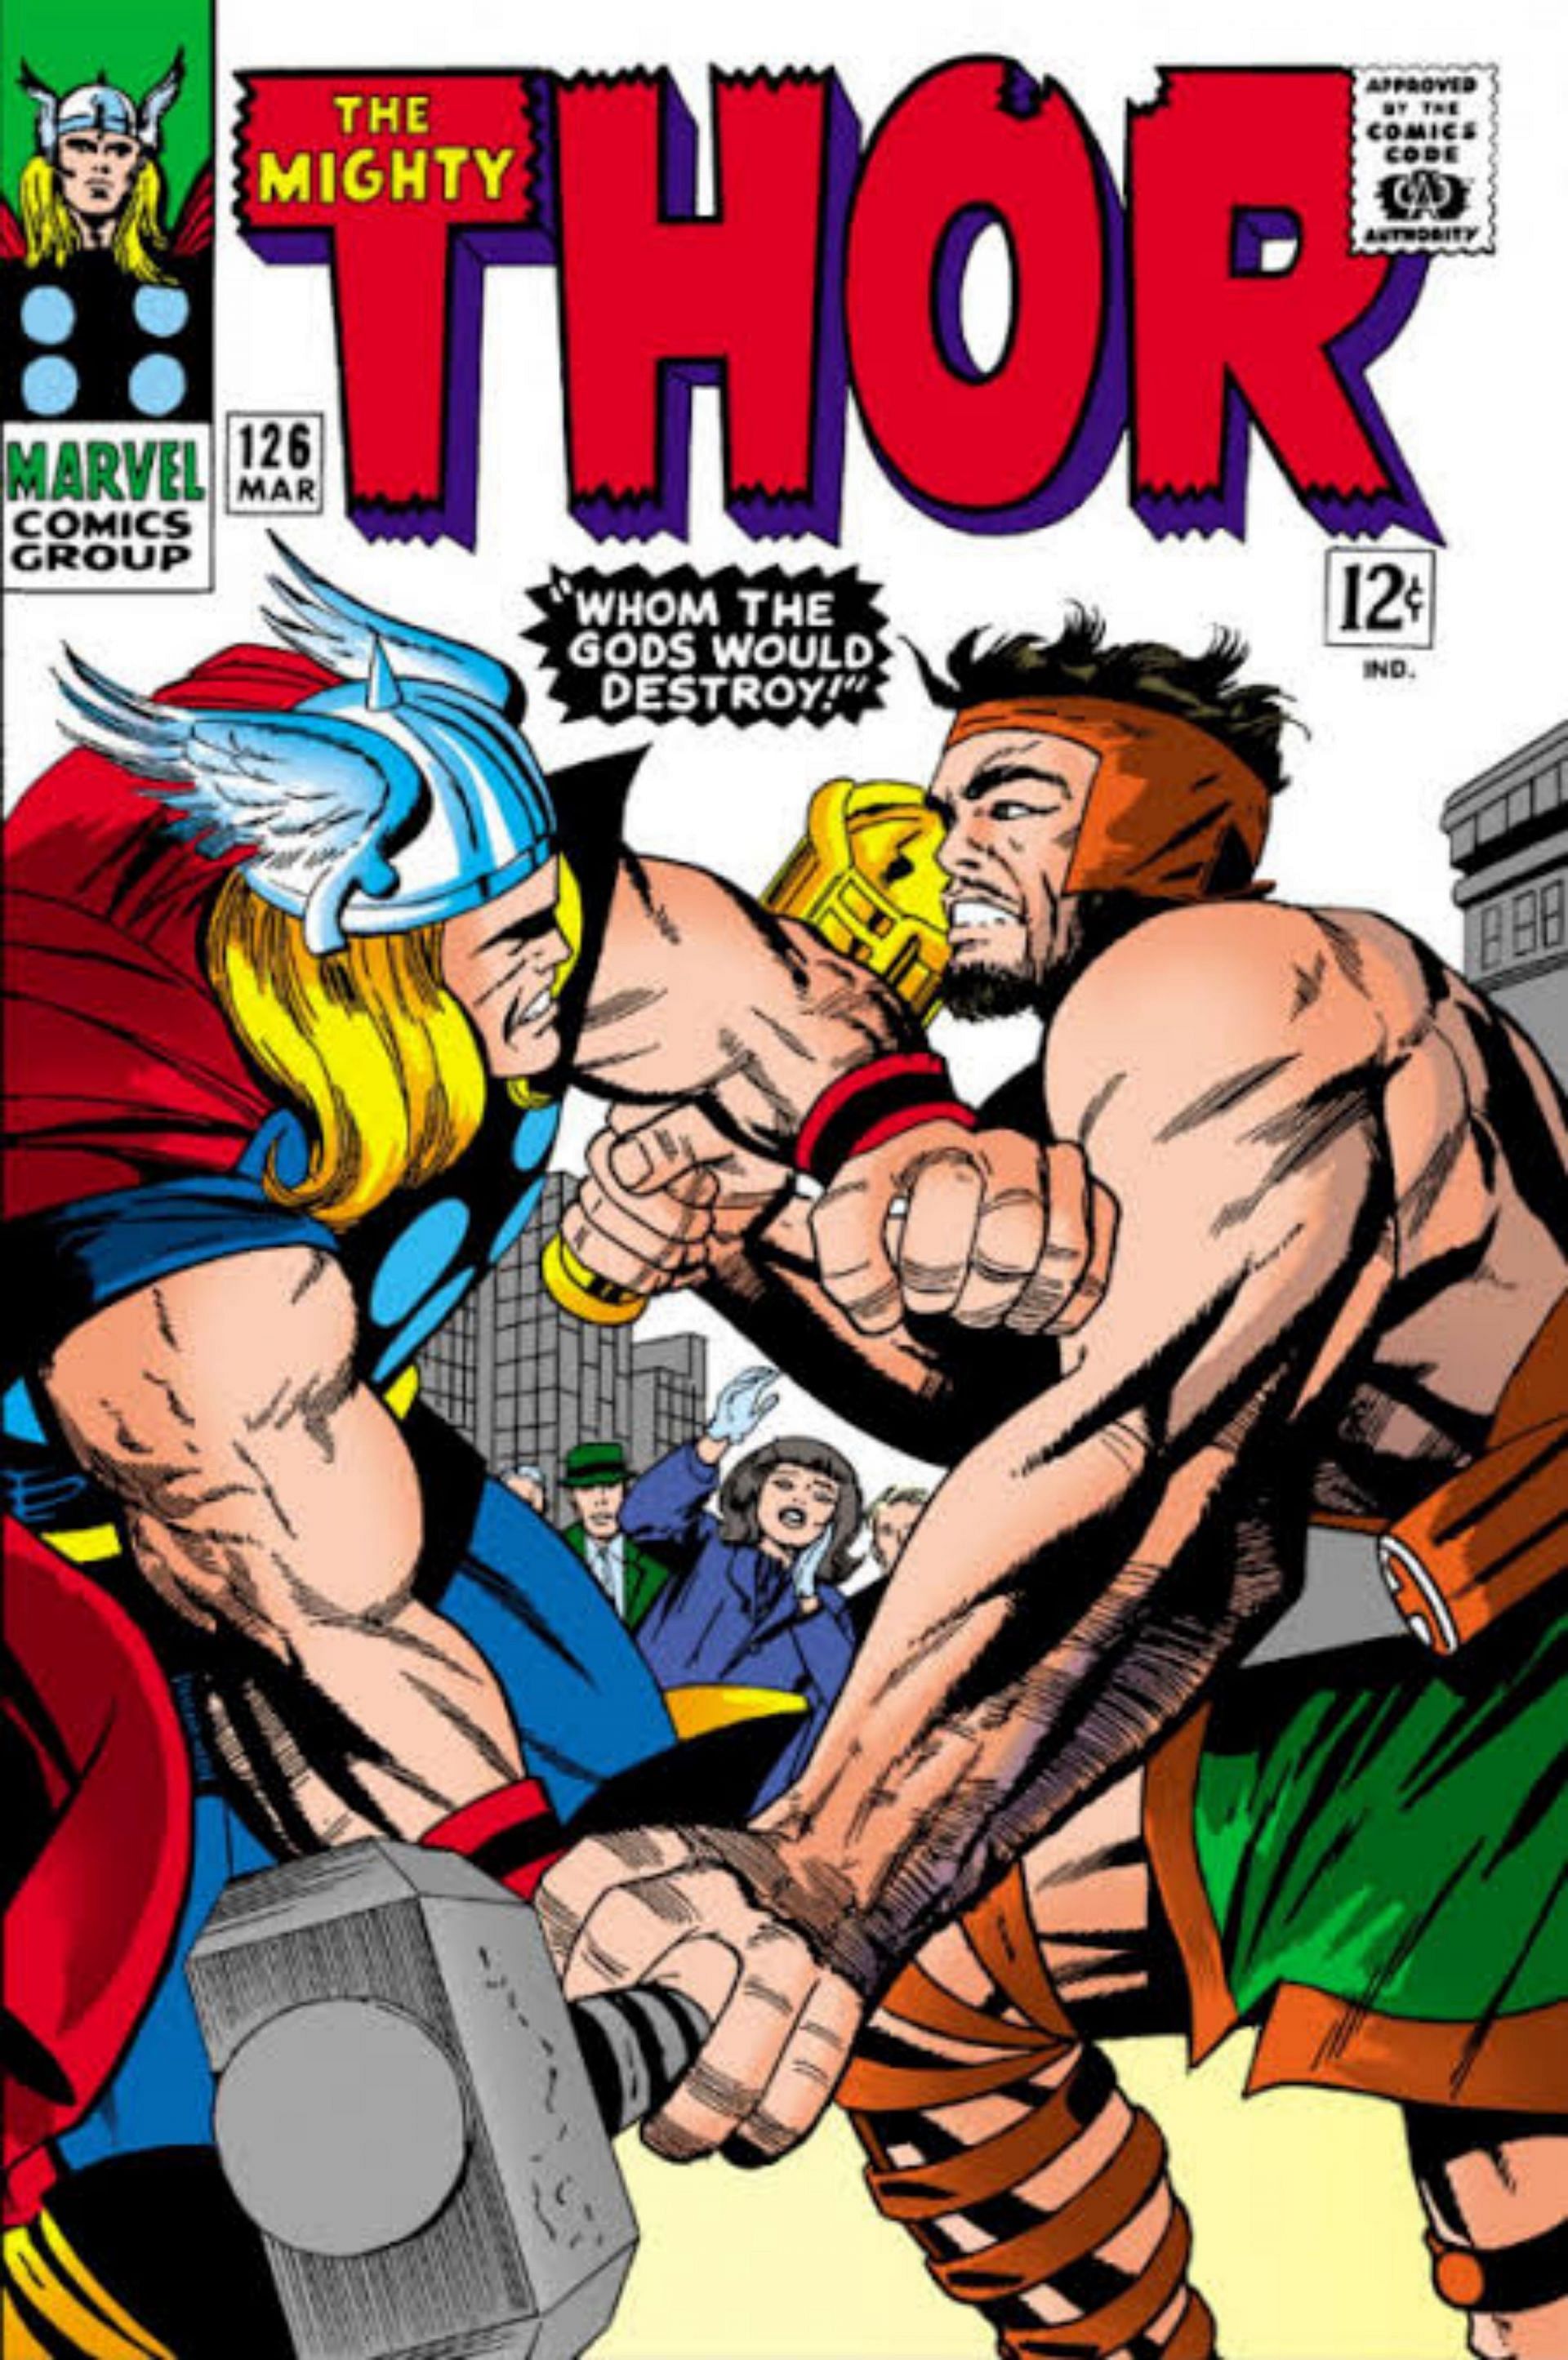 Hercules vs Thor (Image via Marvel Comics)